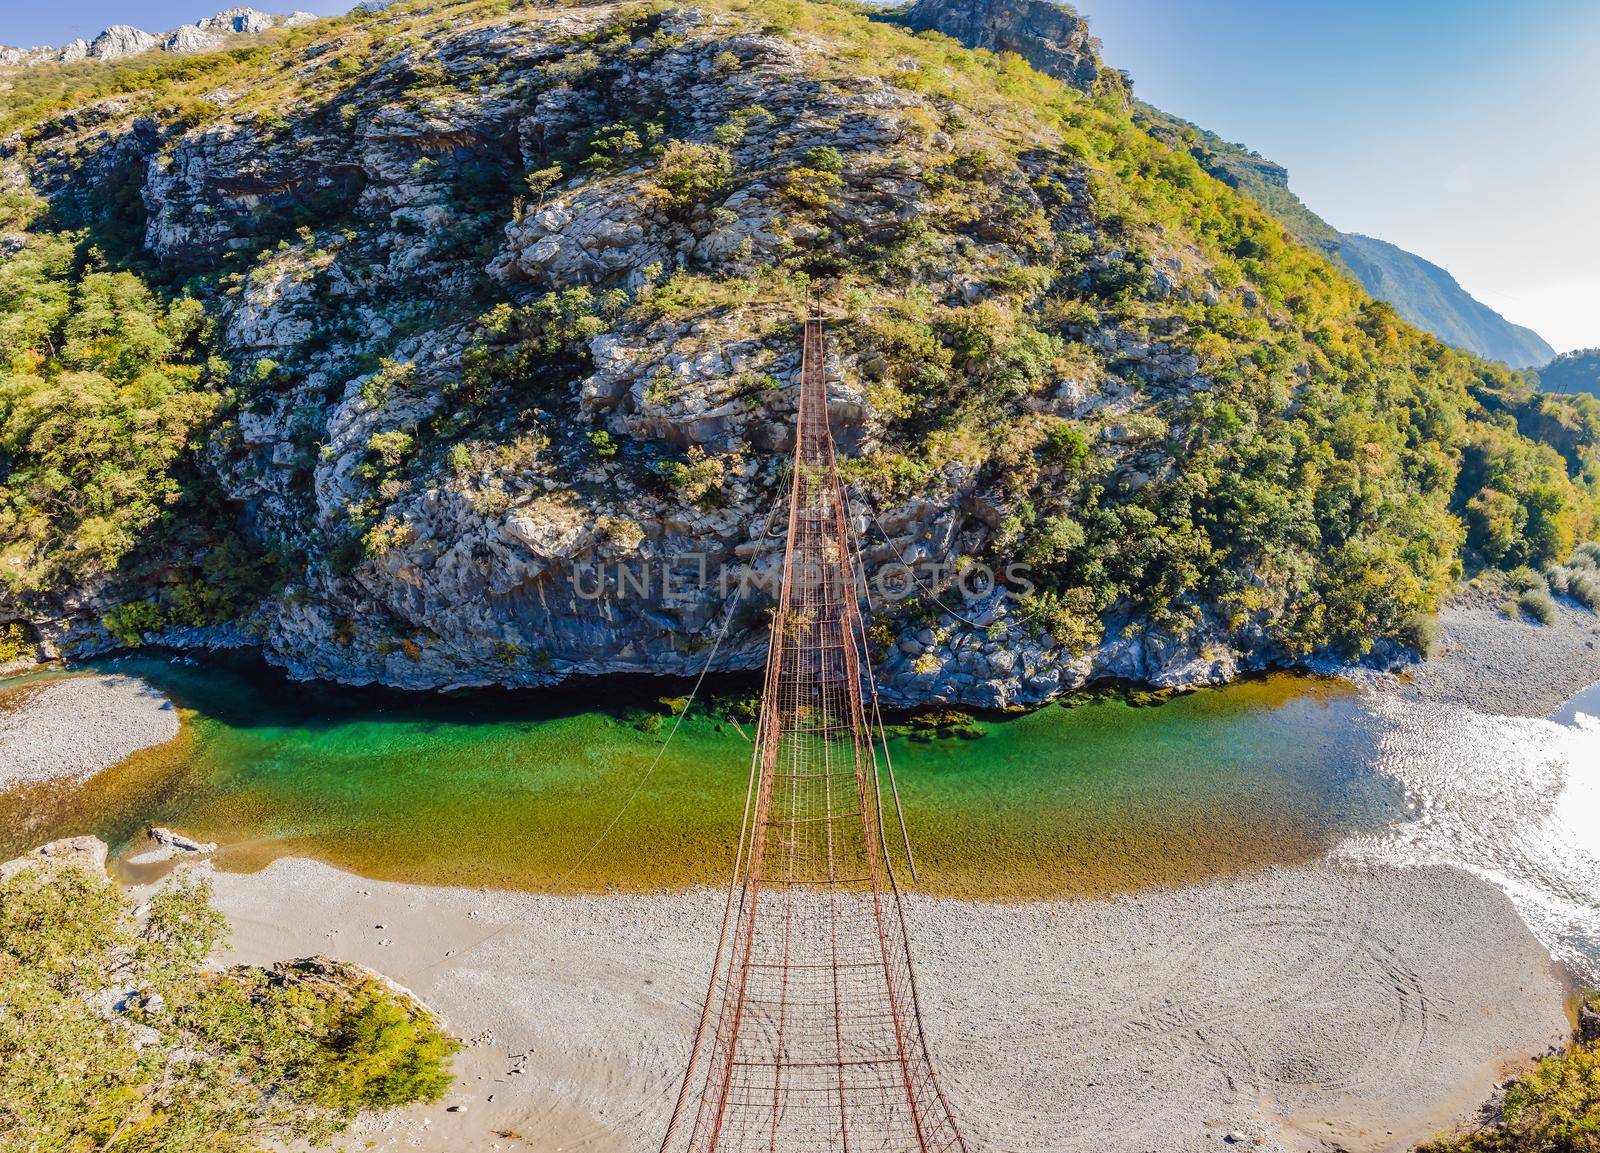 Sights of Montenegro. Landmark Old rusty bridge. Attraction Long extreme suspension iron bridge across the river Moraca. Montenegro by galitskaya